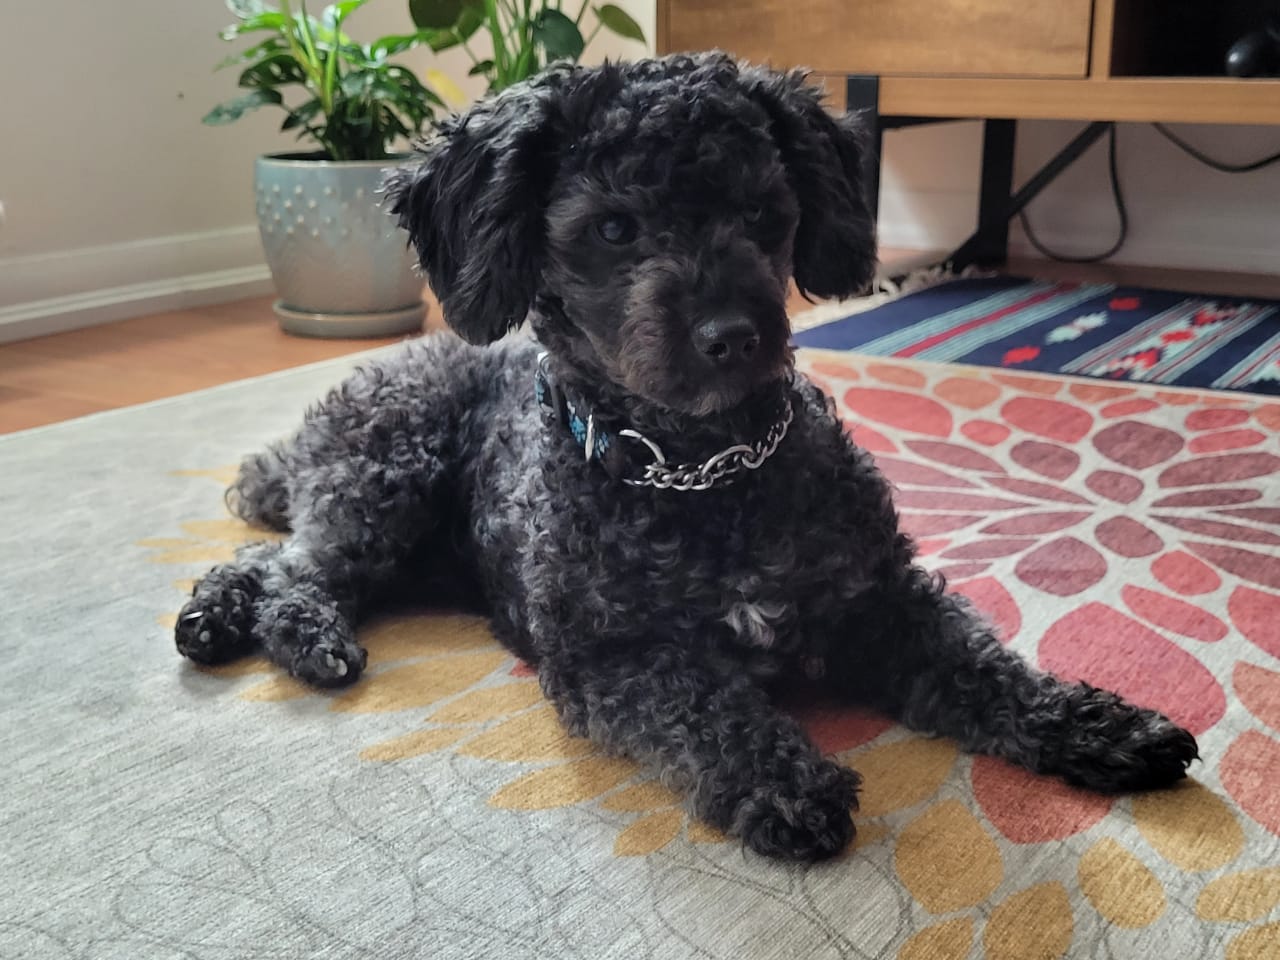 A black small dog sitting on carpet